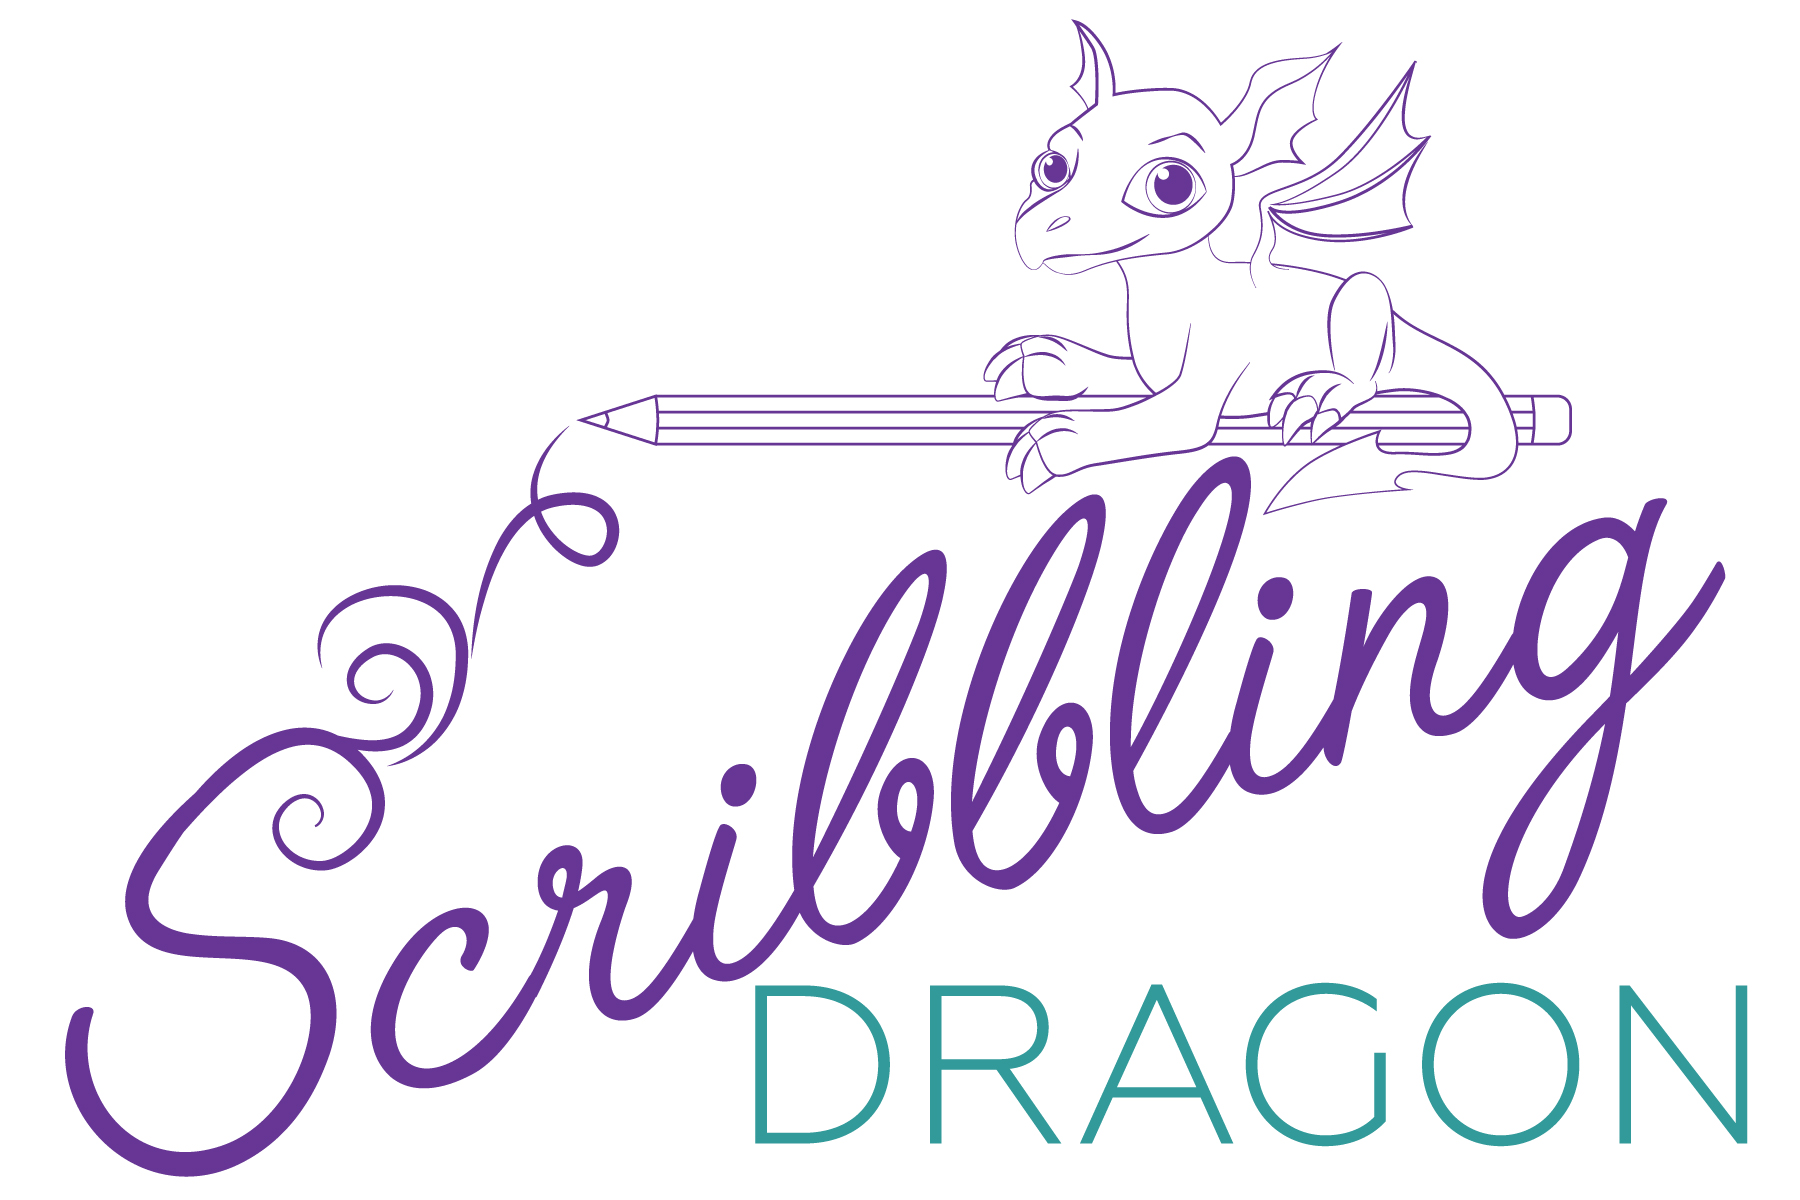 Scribbling Dragon